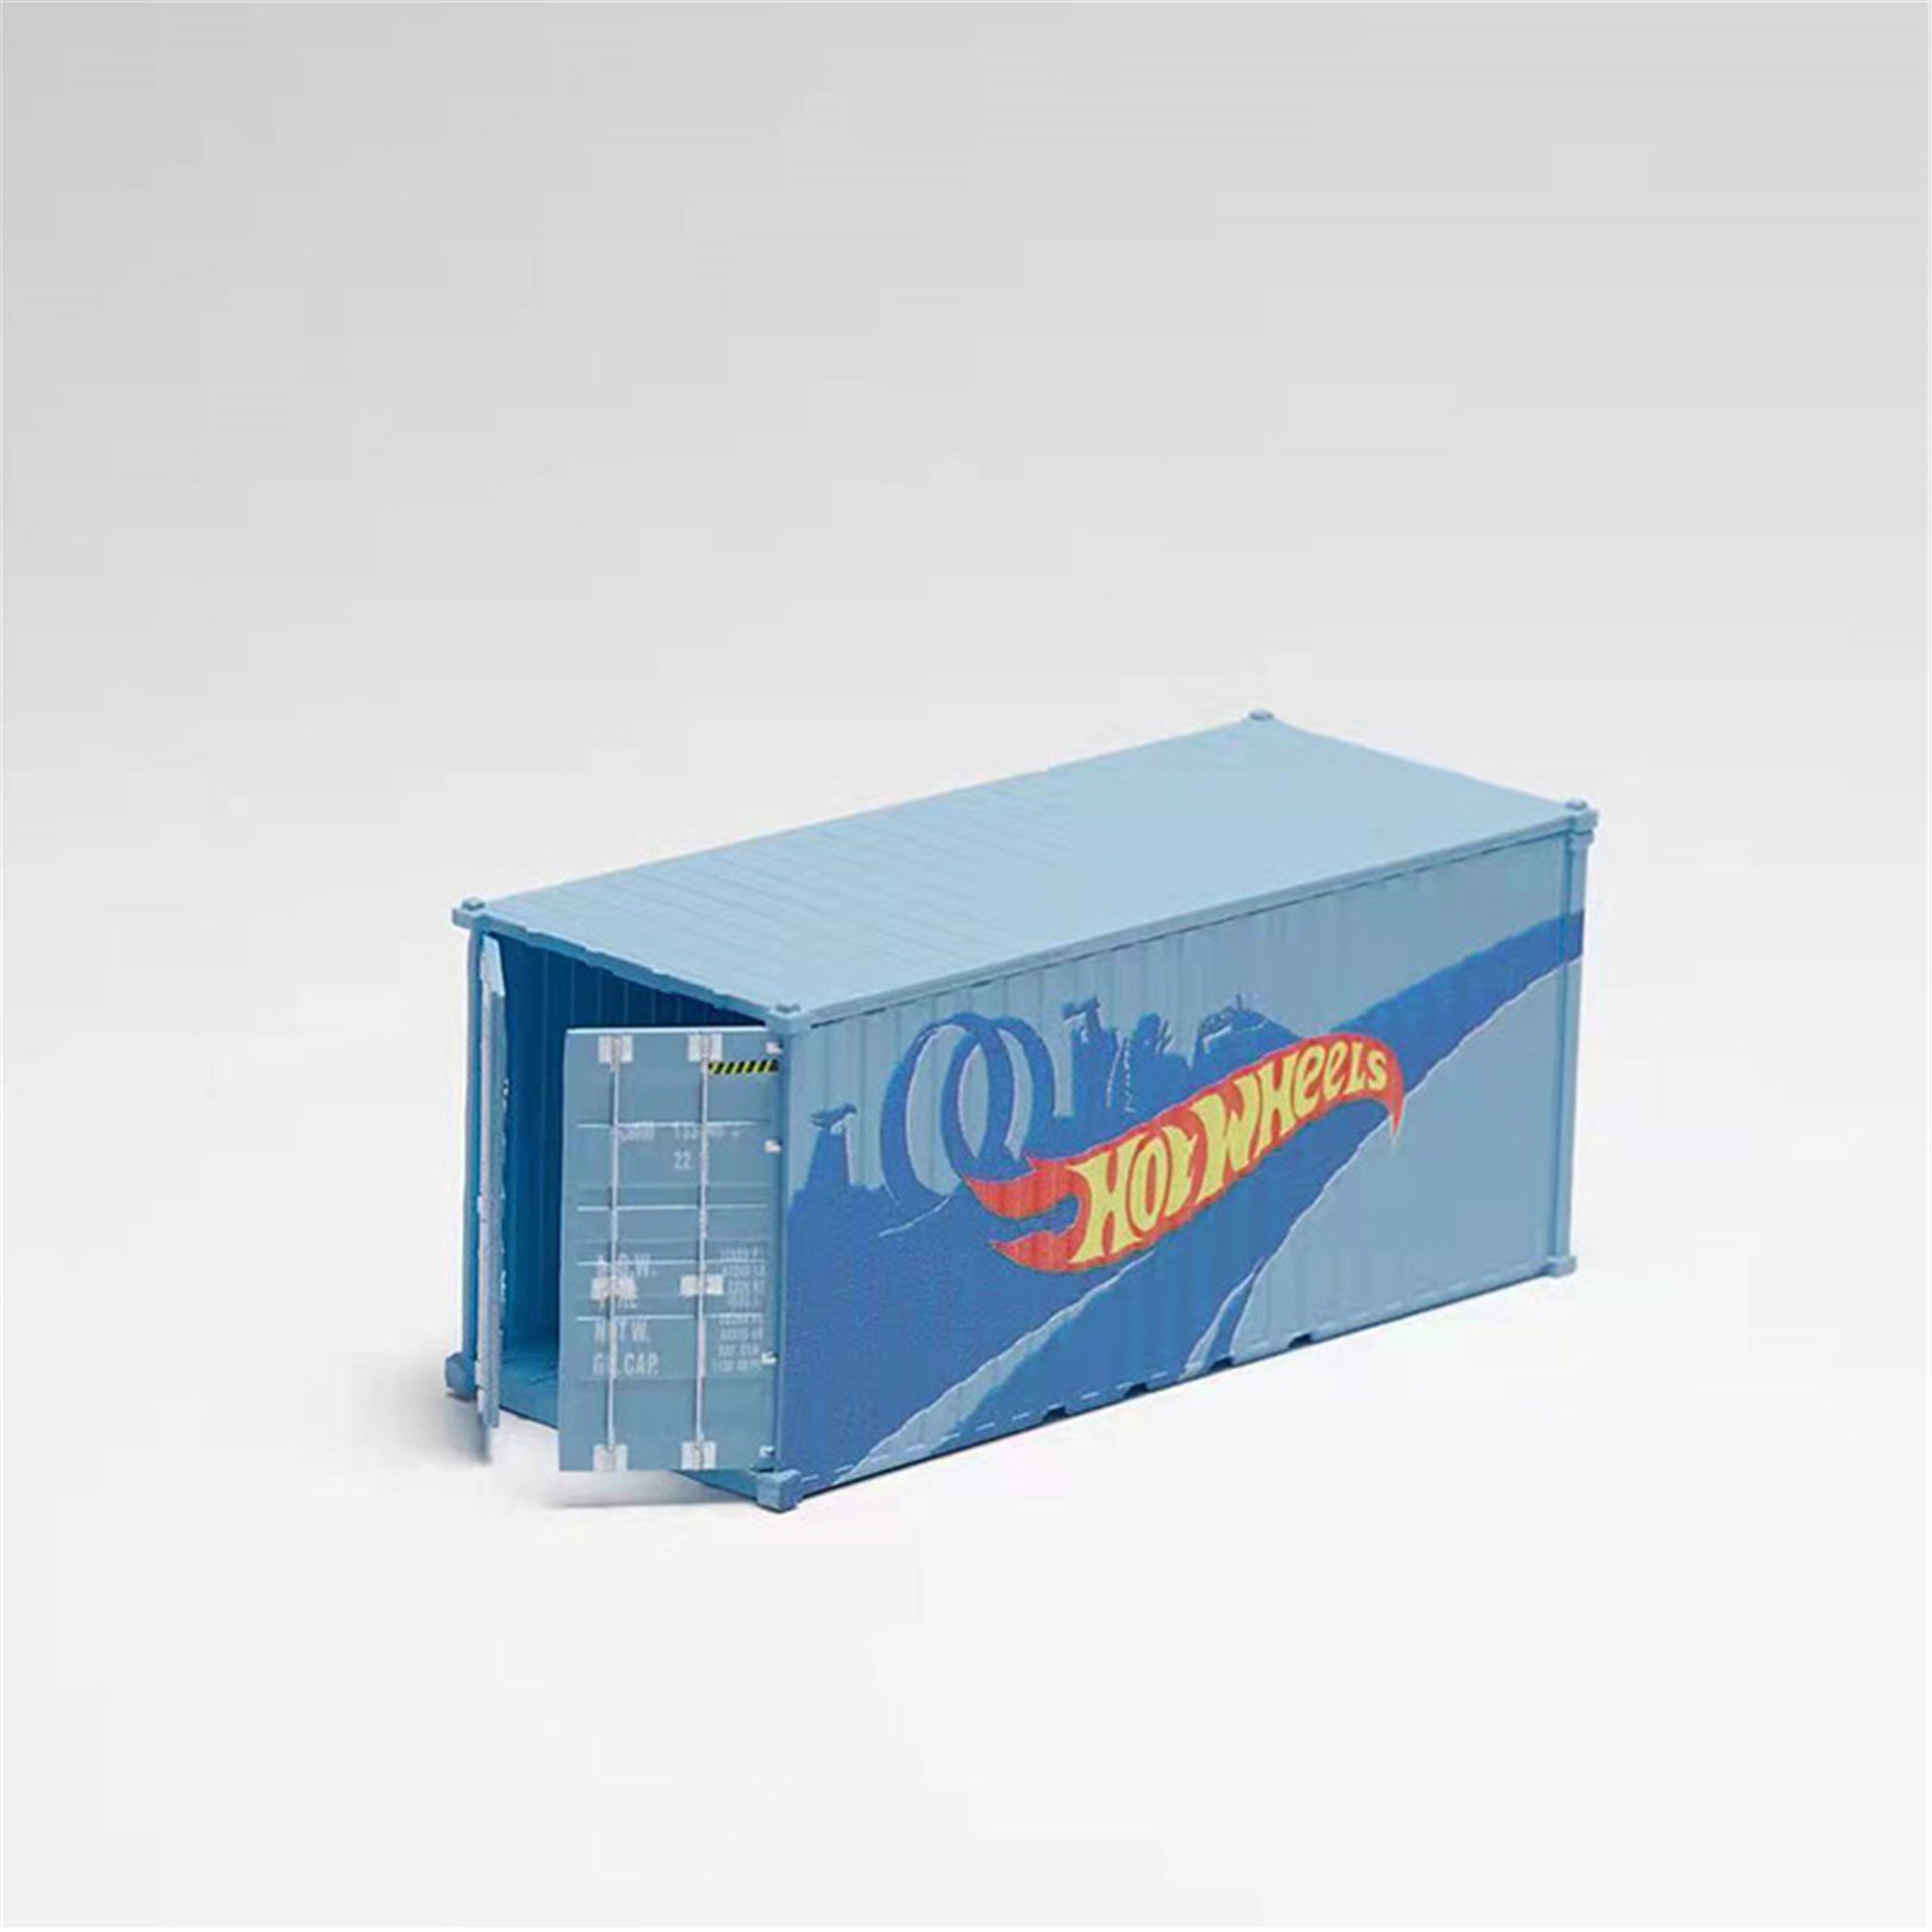 1/64 BRE DATSUN Hotwheels Takara Tomy Container - 164model